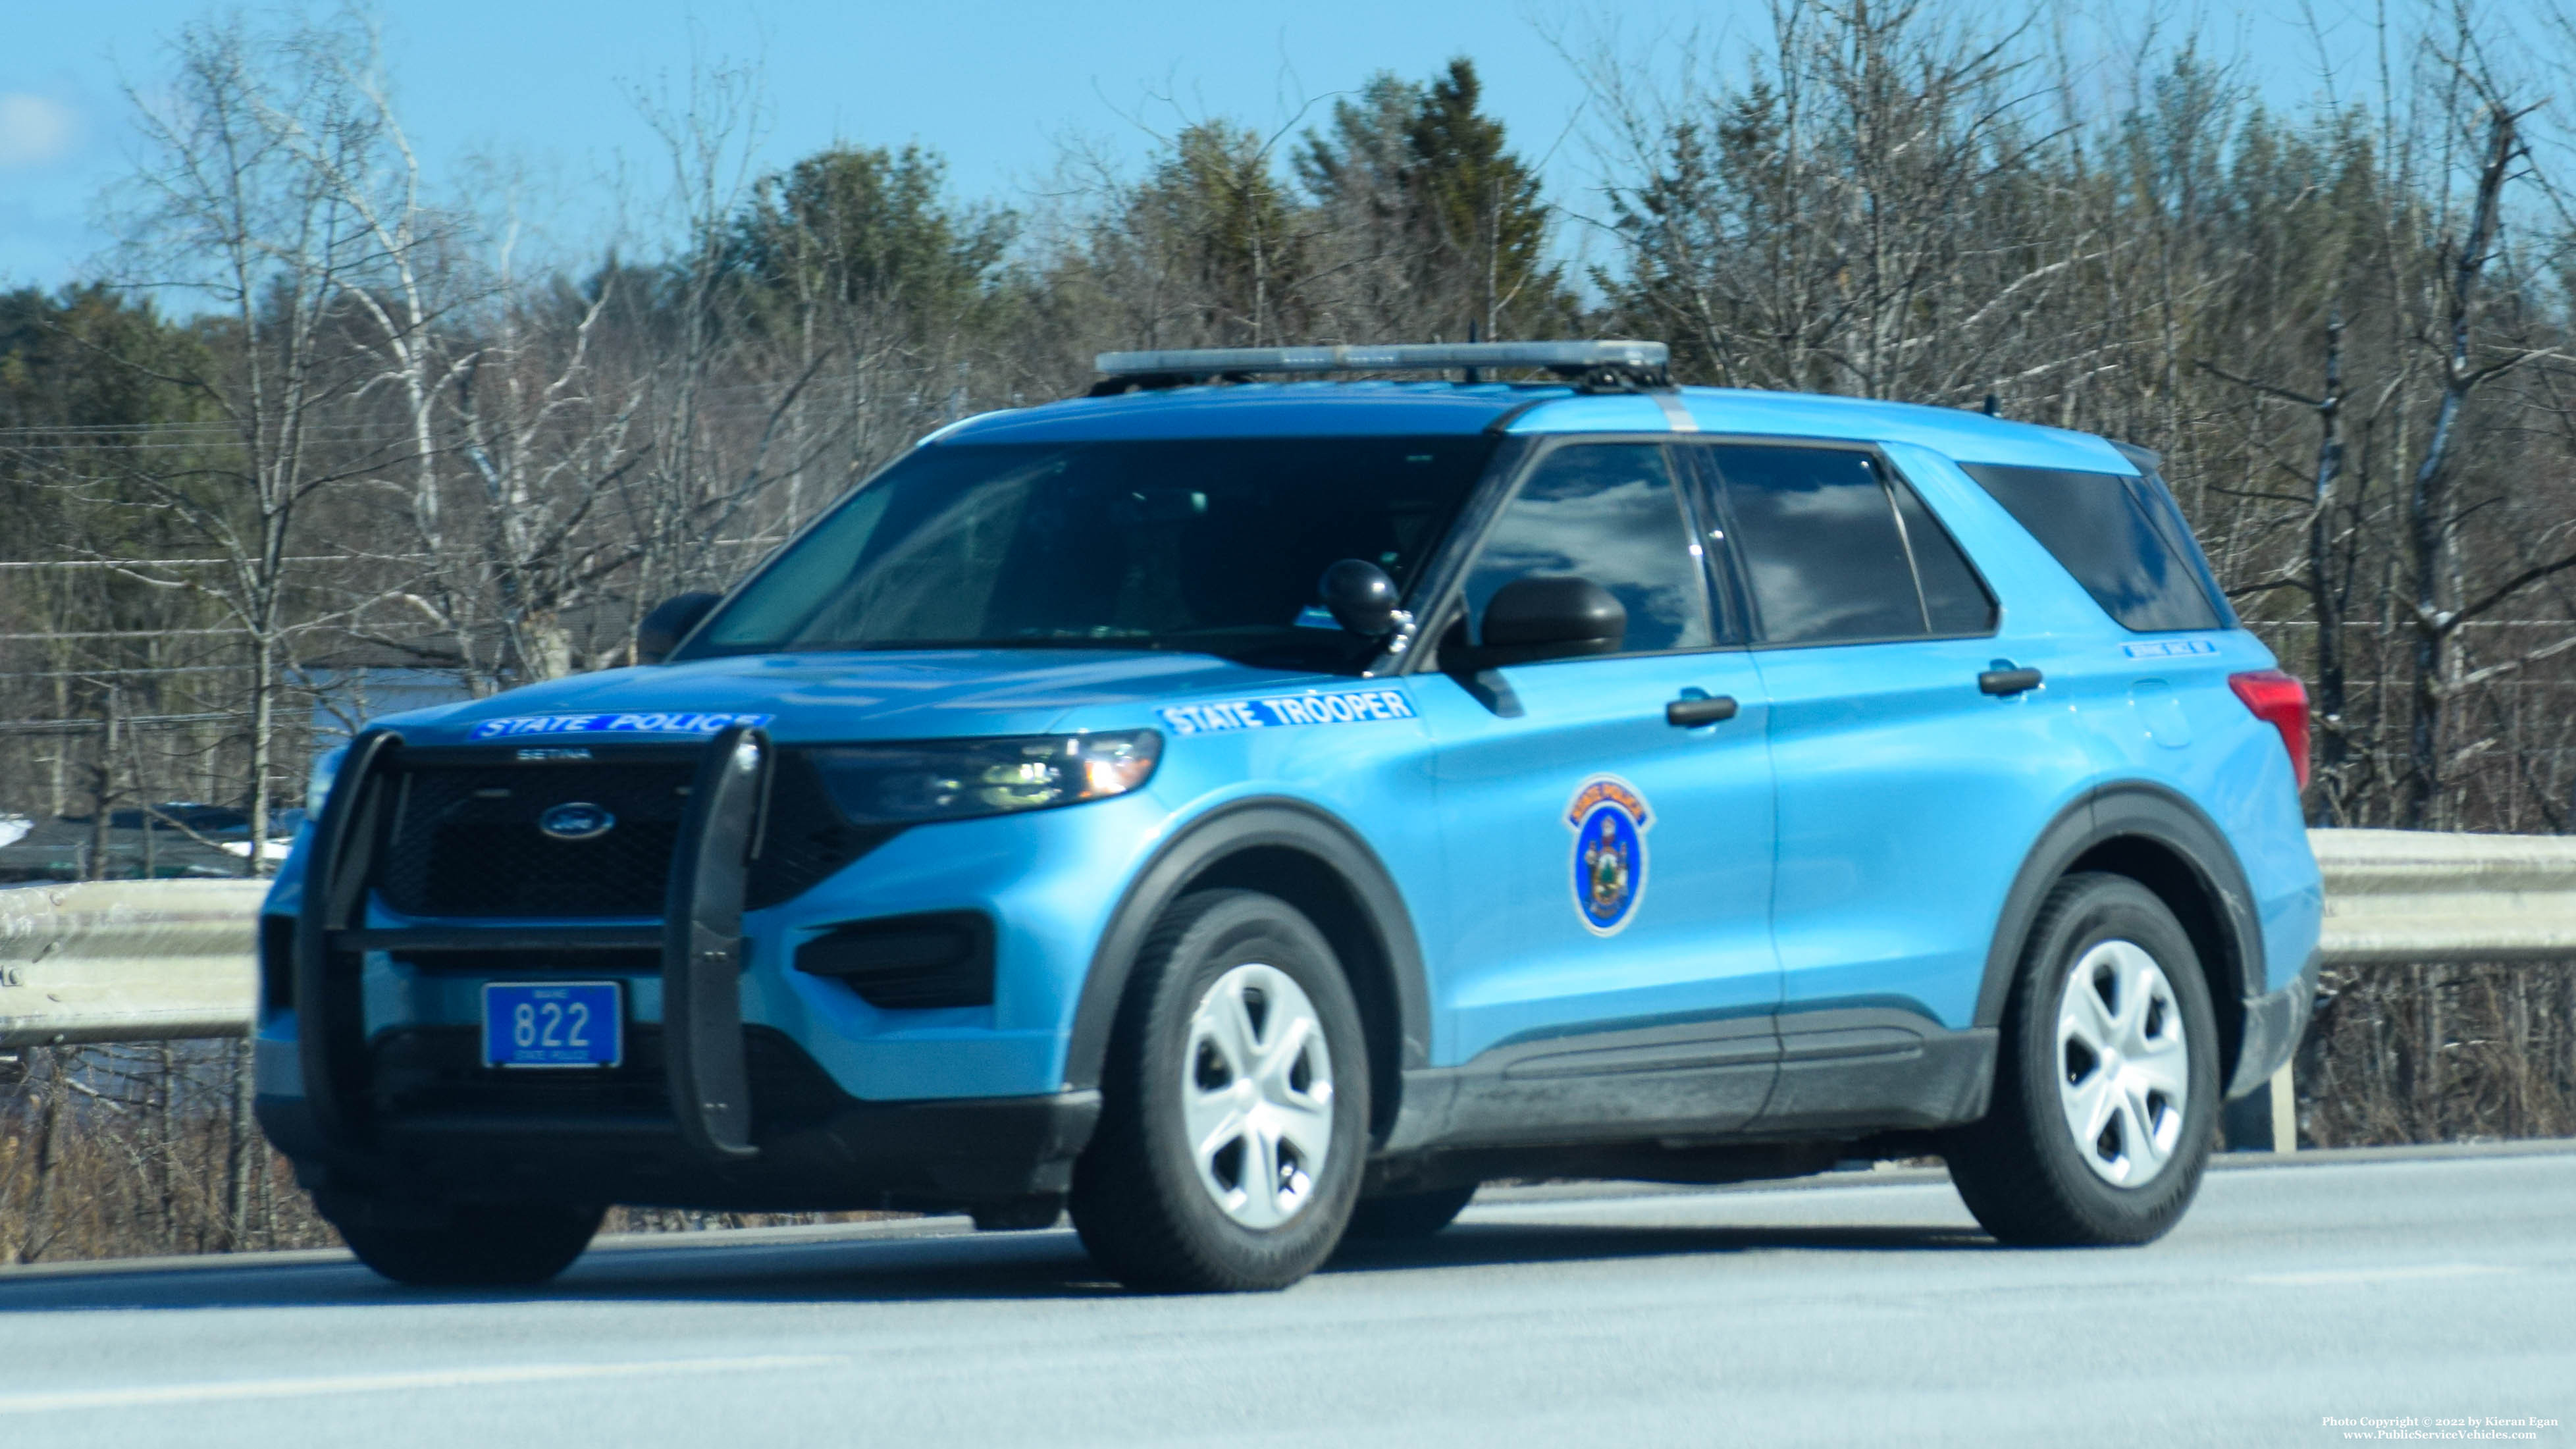 A photo  of Maine State Police
            Cruiser 822, a 2020-2021 Ford Police Interceptor Utility             taken by Kieran Egan